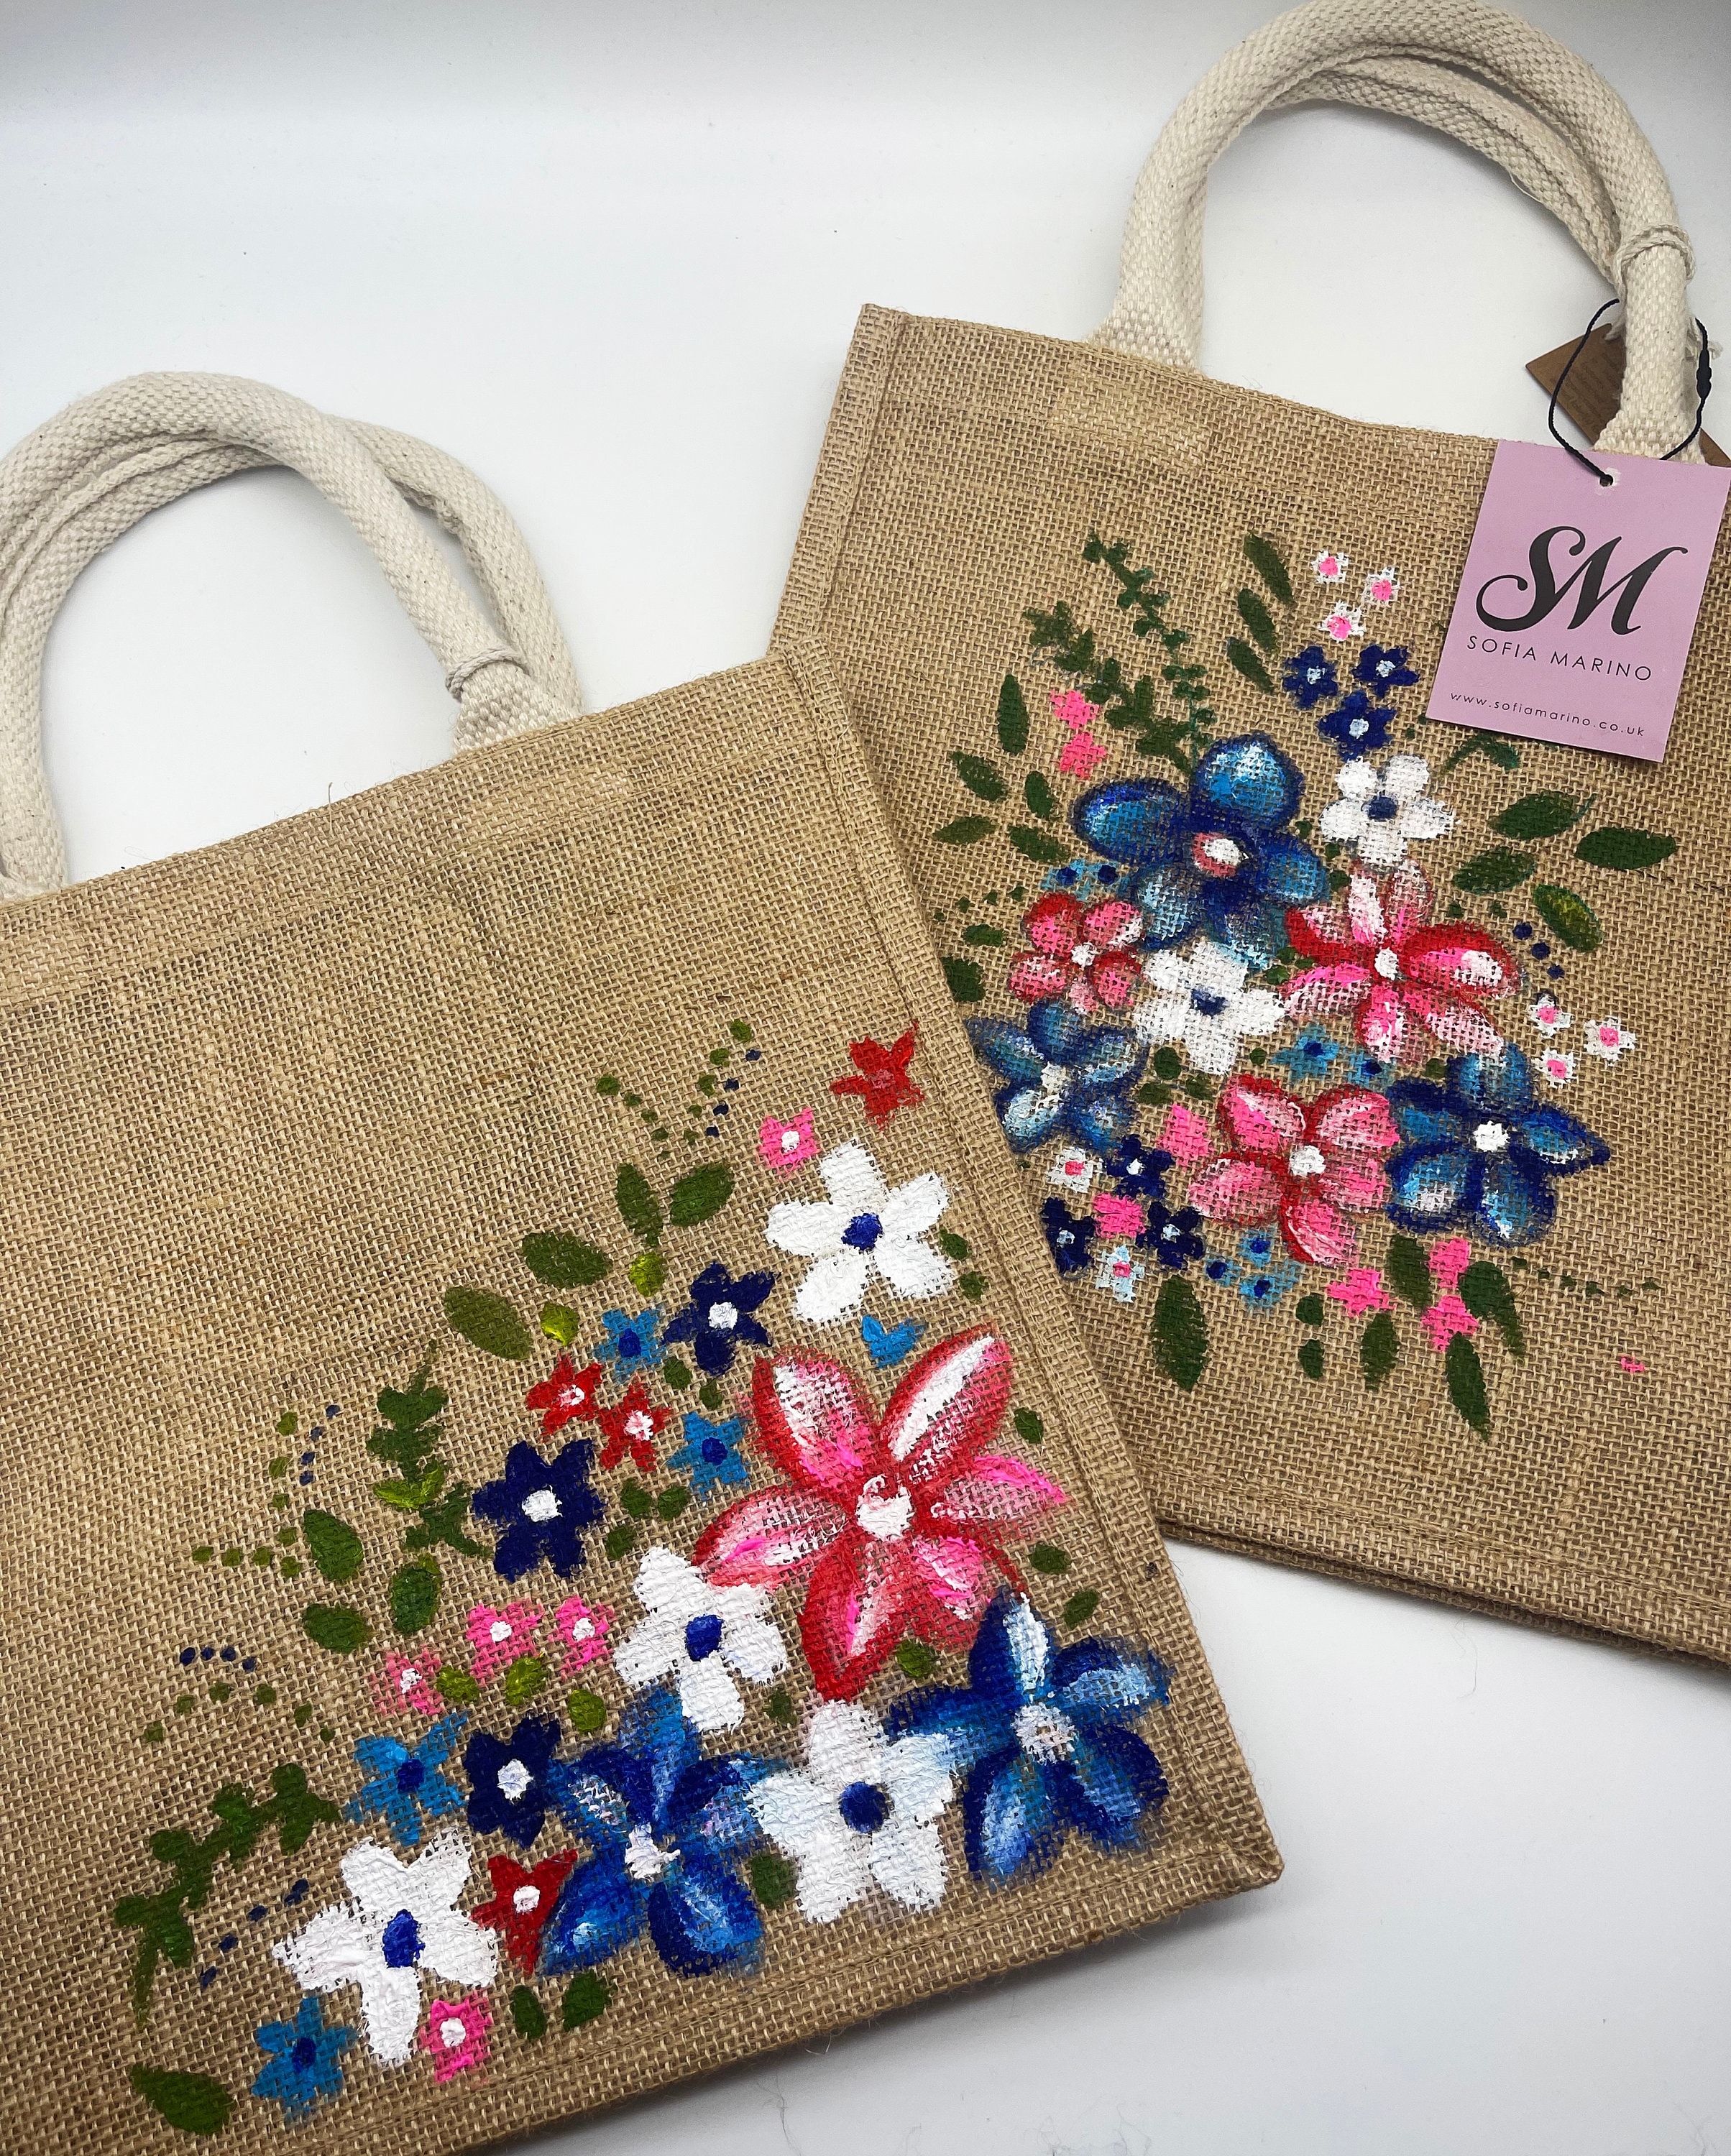 Medium Jute Bag with Pink Fabric Flower Trim Lunch Bag Book Bag Gift Bag  MB3 | Fabric flowers, Craft bags, Jute bags